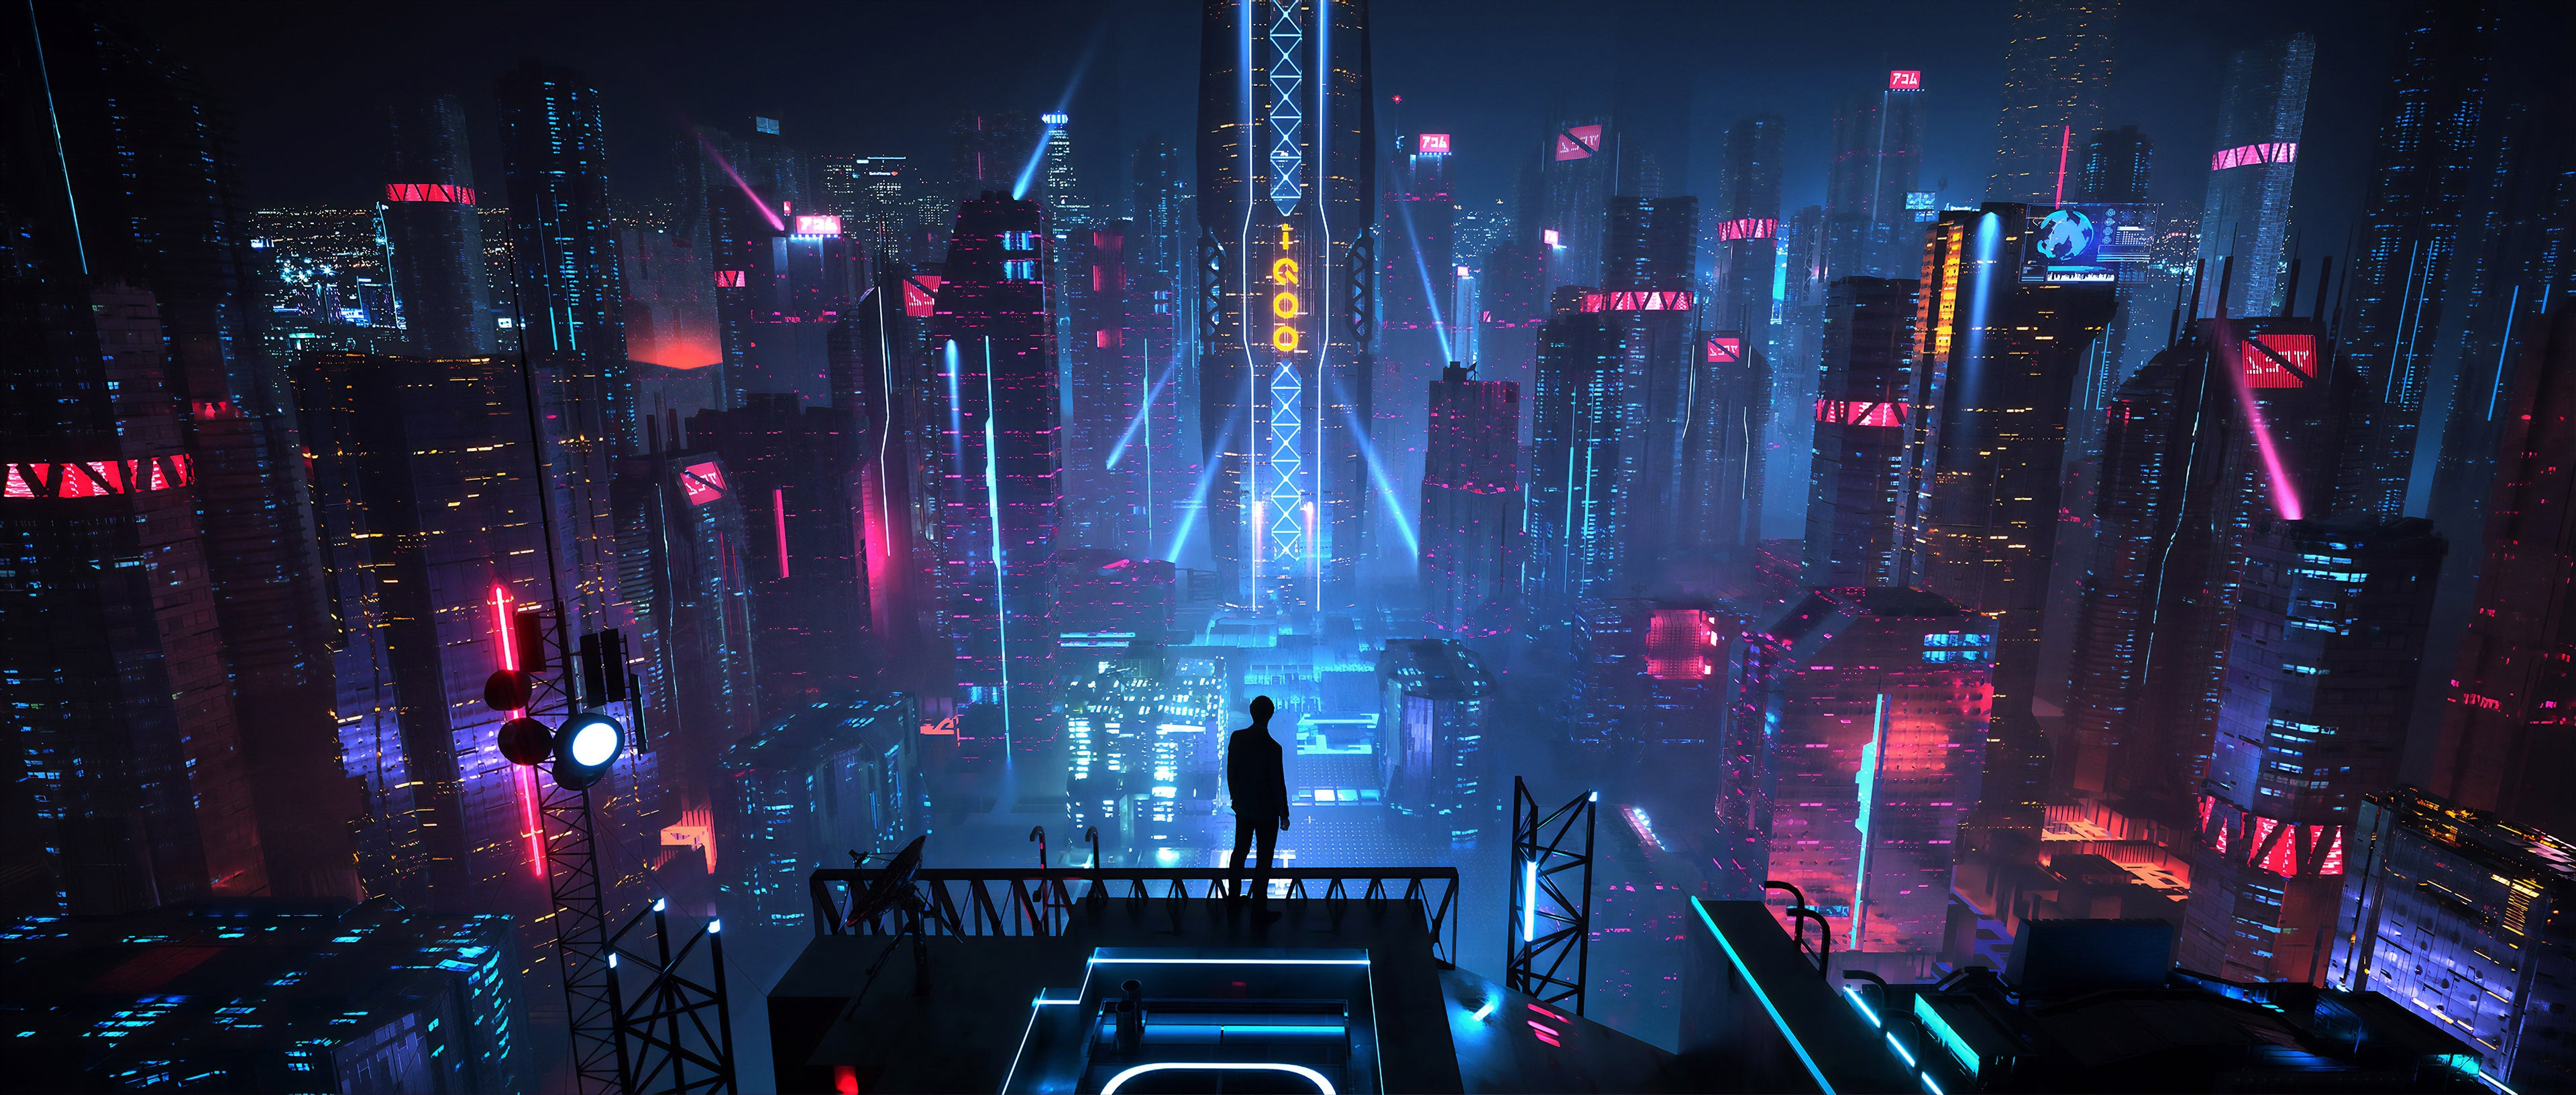 Cyberpunk City 4k Wallpaper